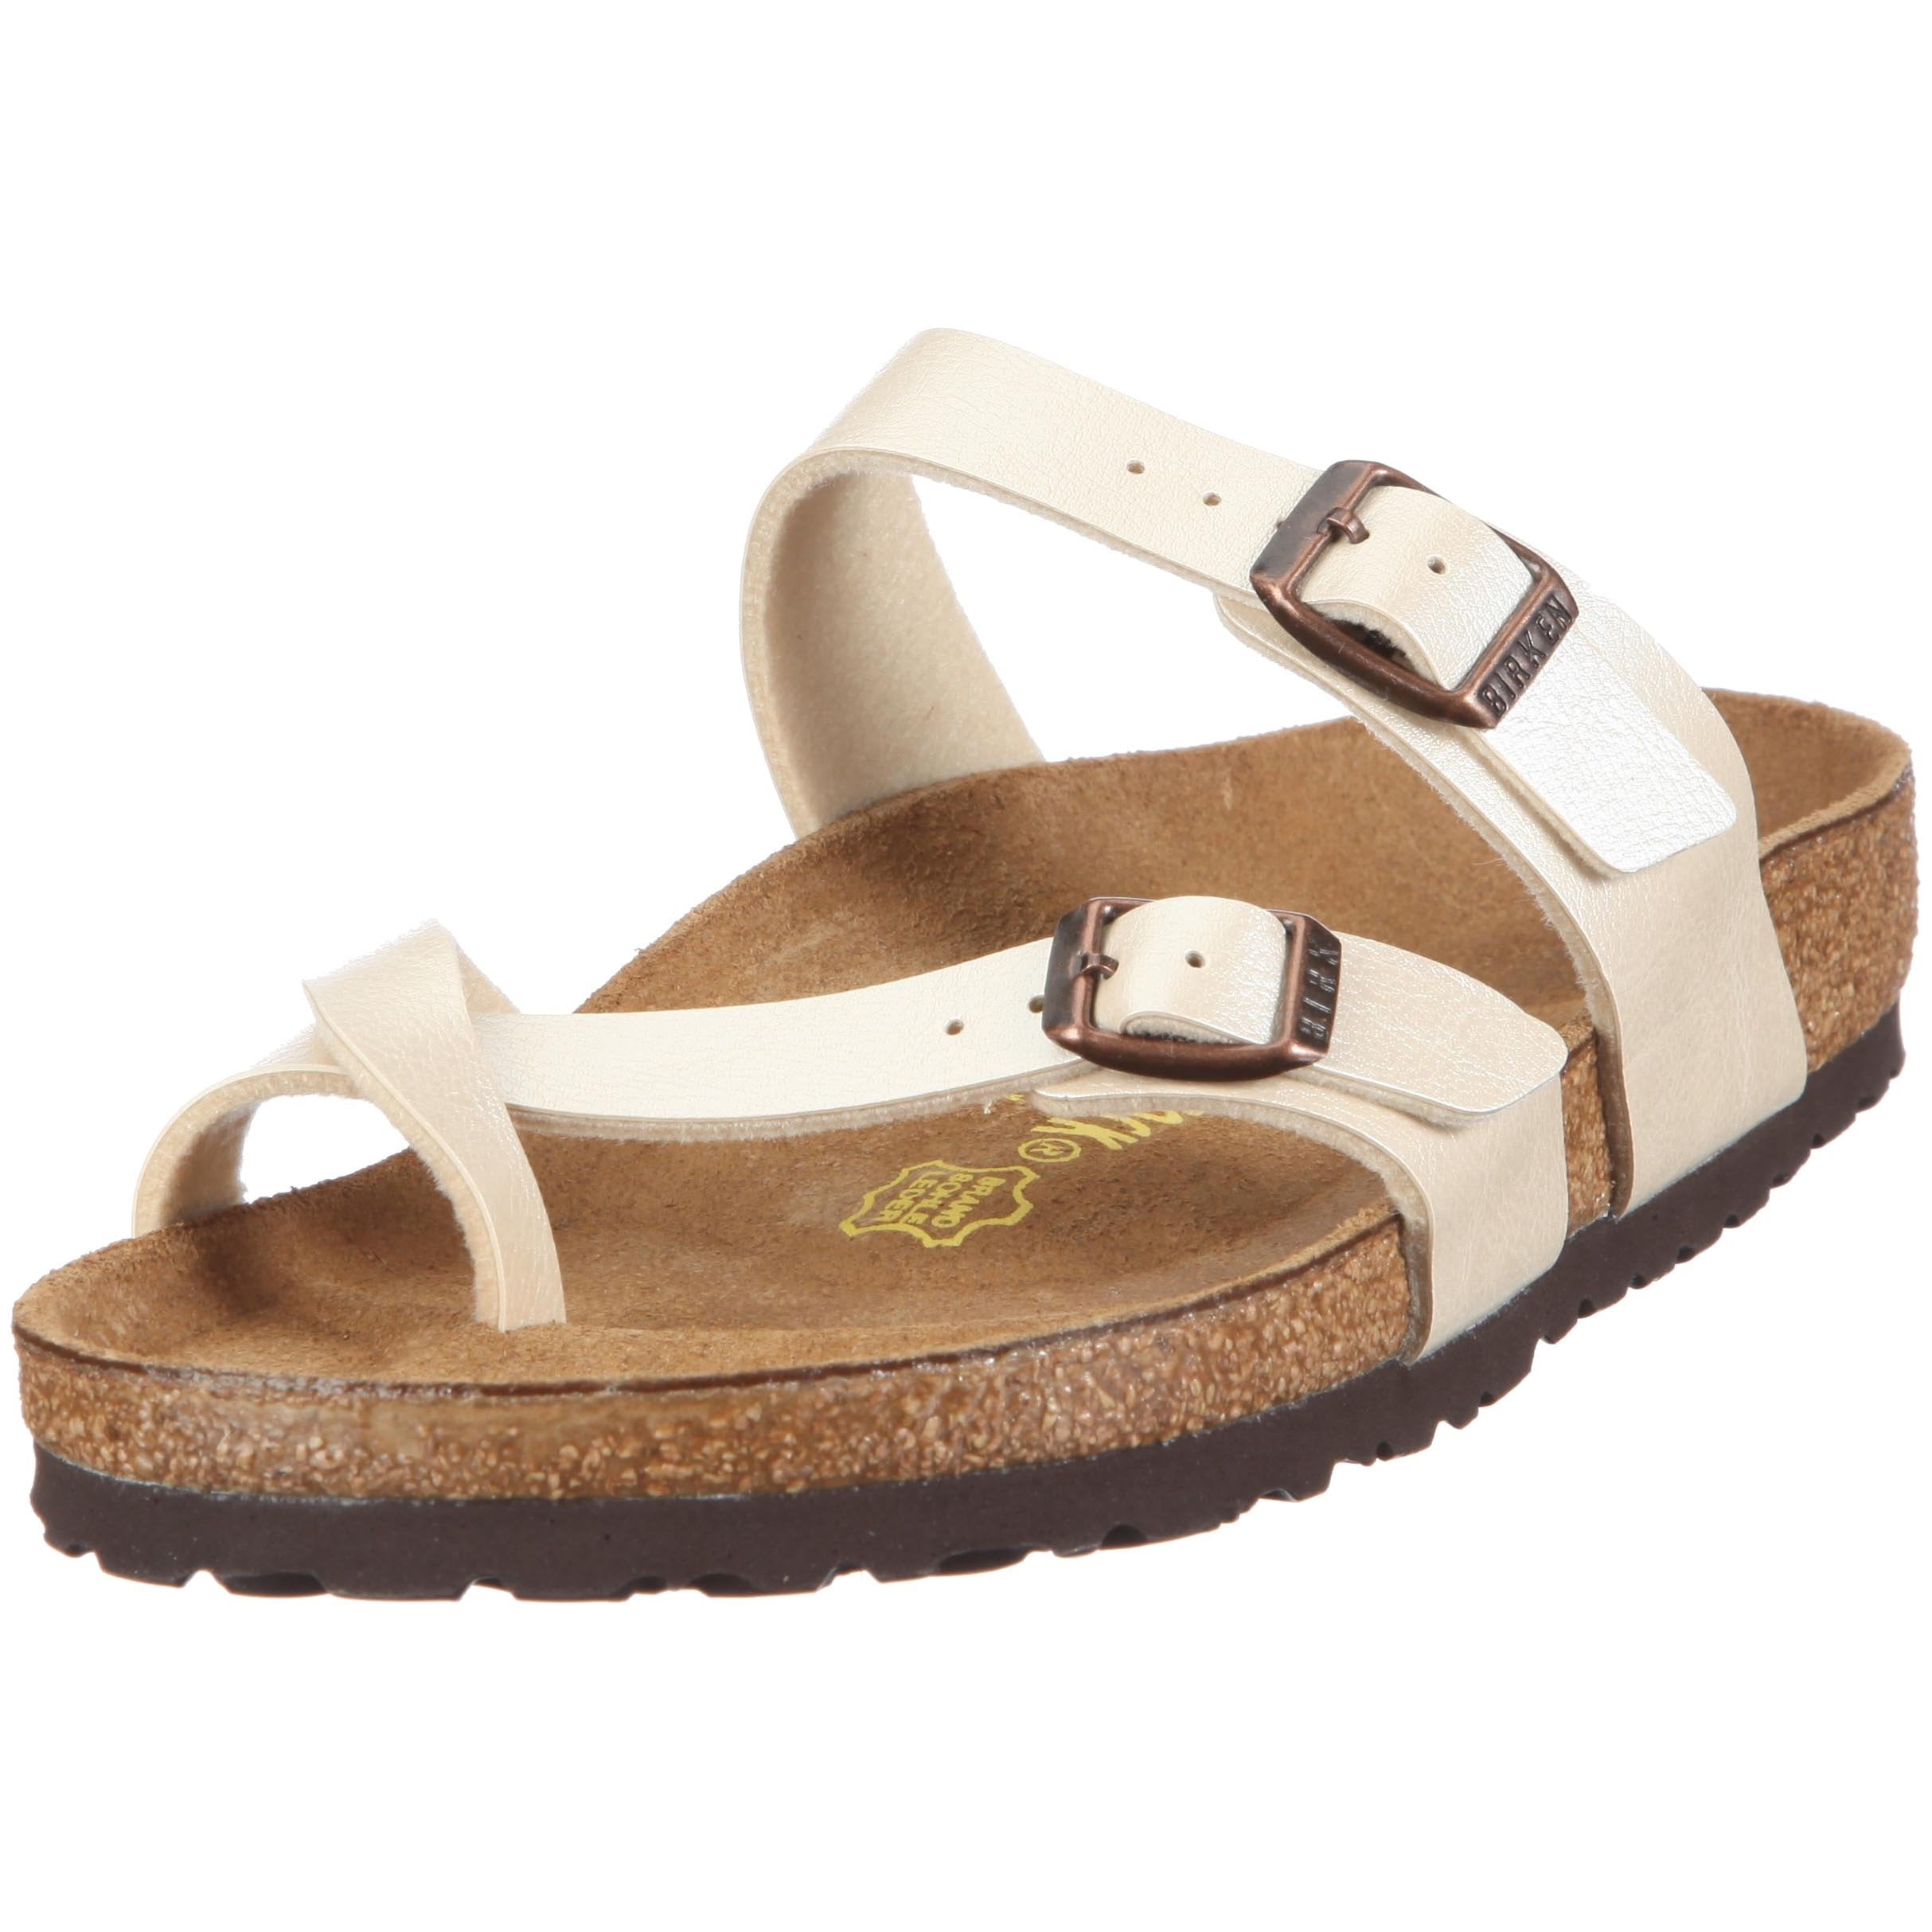 Birkenstock 71661: Unisex Birko-Flor Graceful Pearl White Walking Sandals (39 M - Walmart.com